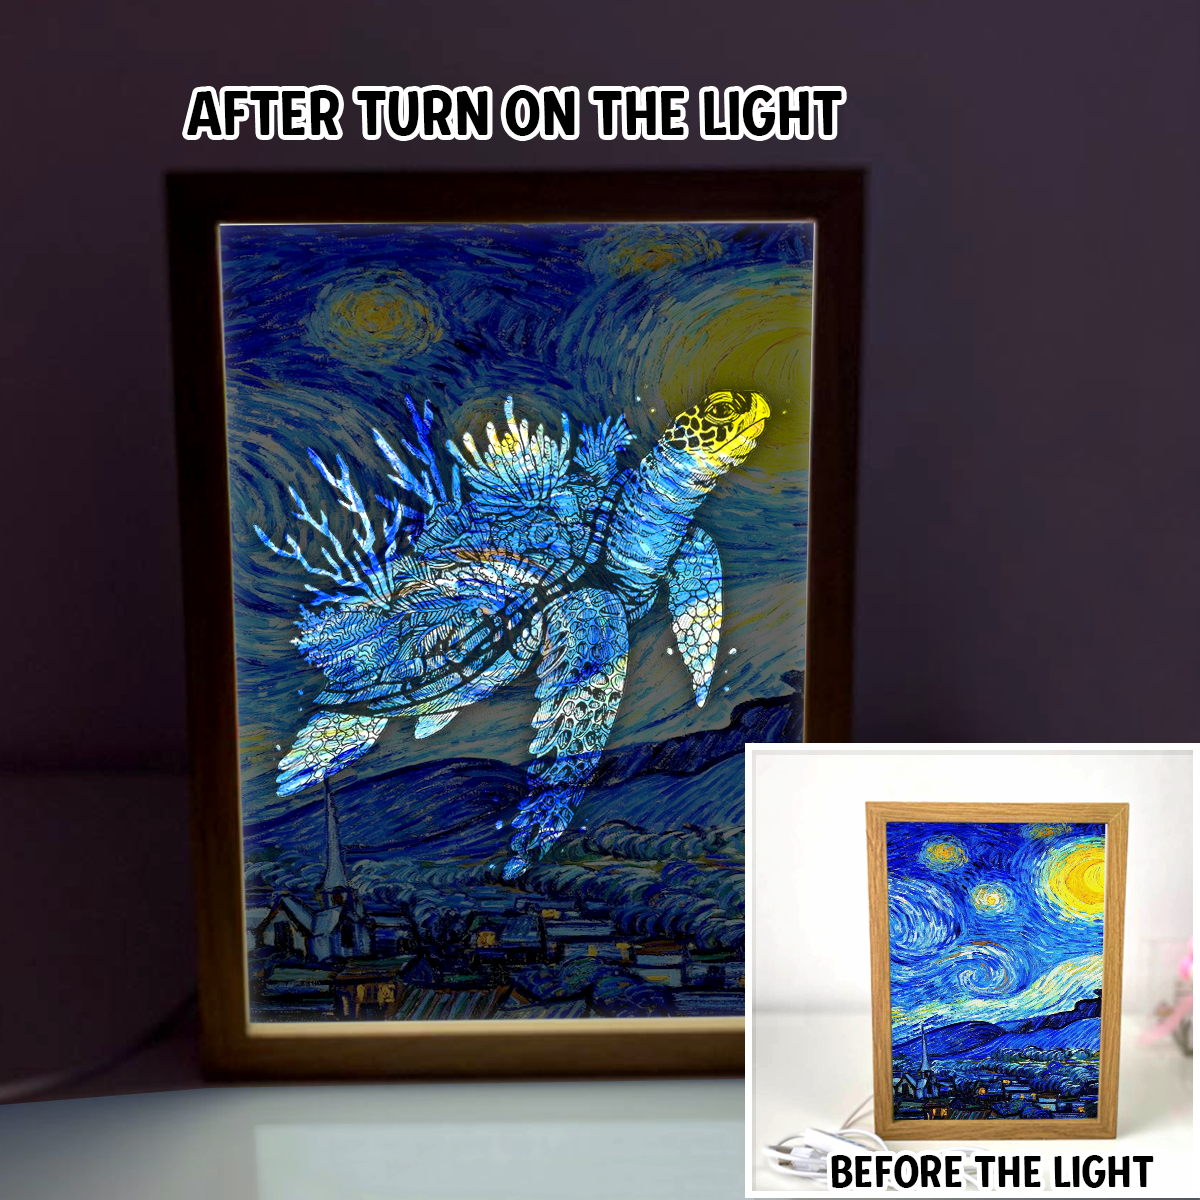 The Sea Turtle Showed Up On Art Background 4D Art Led Light Wooden Frame Night Light Decoration